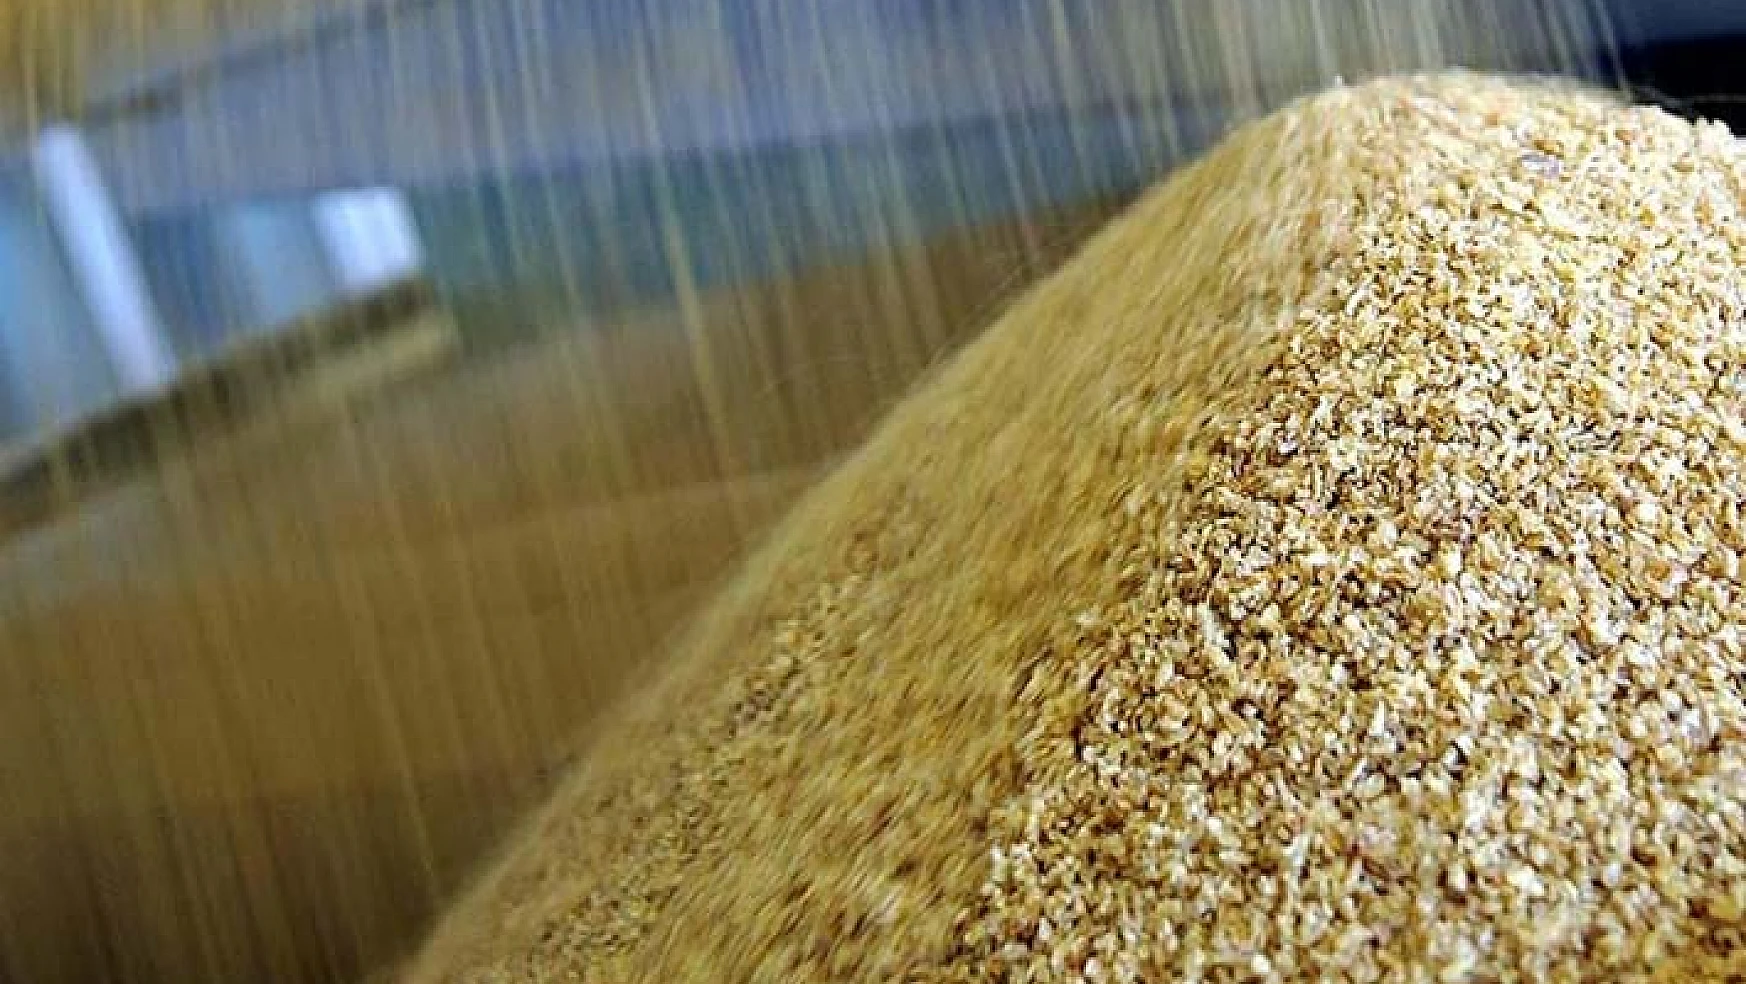 300 bin ton buğday ithalatı planını onayladı